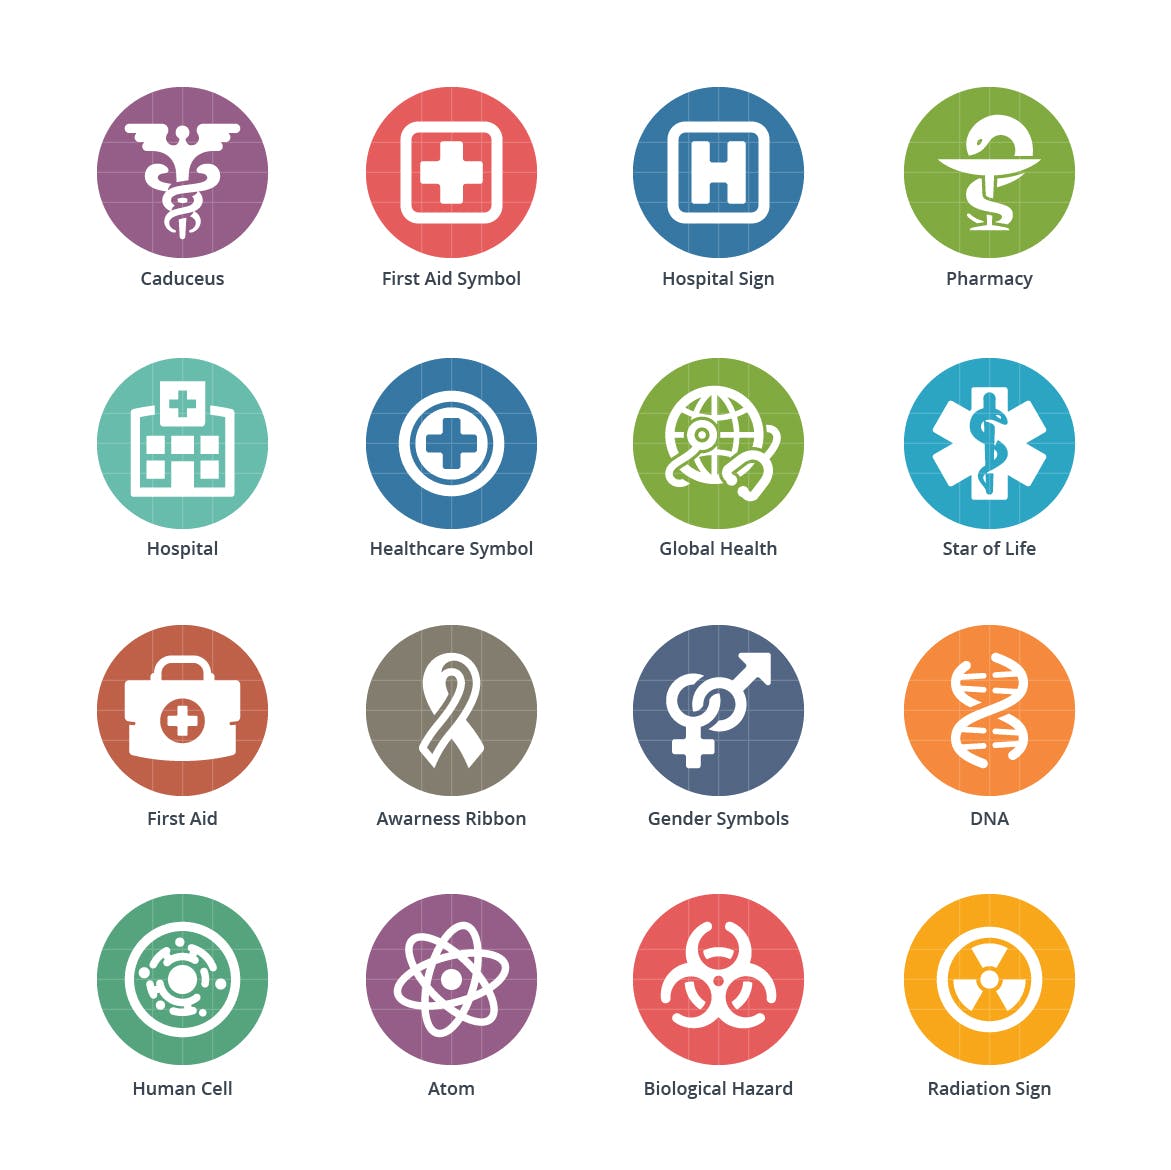 Colored系列-医疗保健主题矢量16设计素材网精选图标集v1 Medical & Health Care Icons Set 1 – Colored Series插图(2)